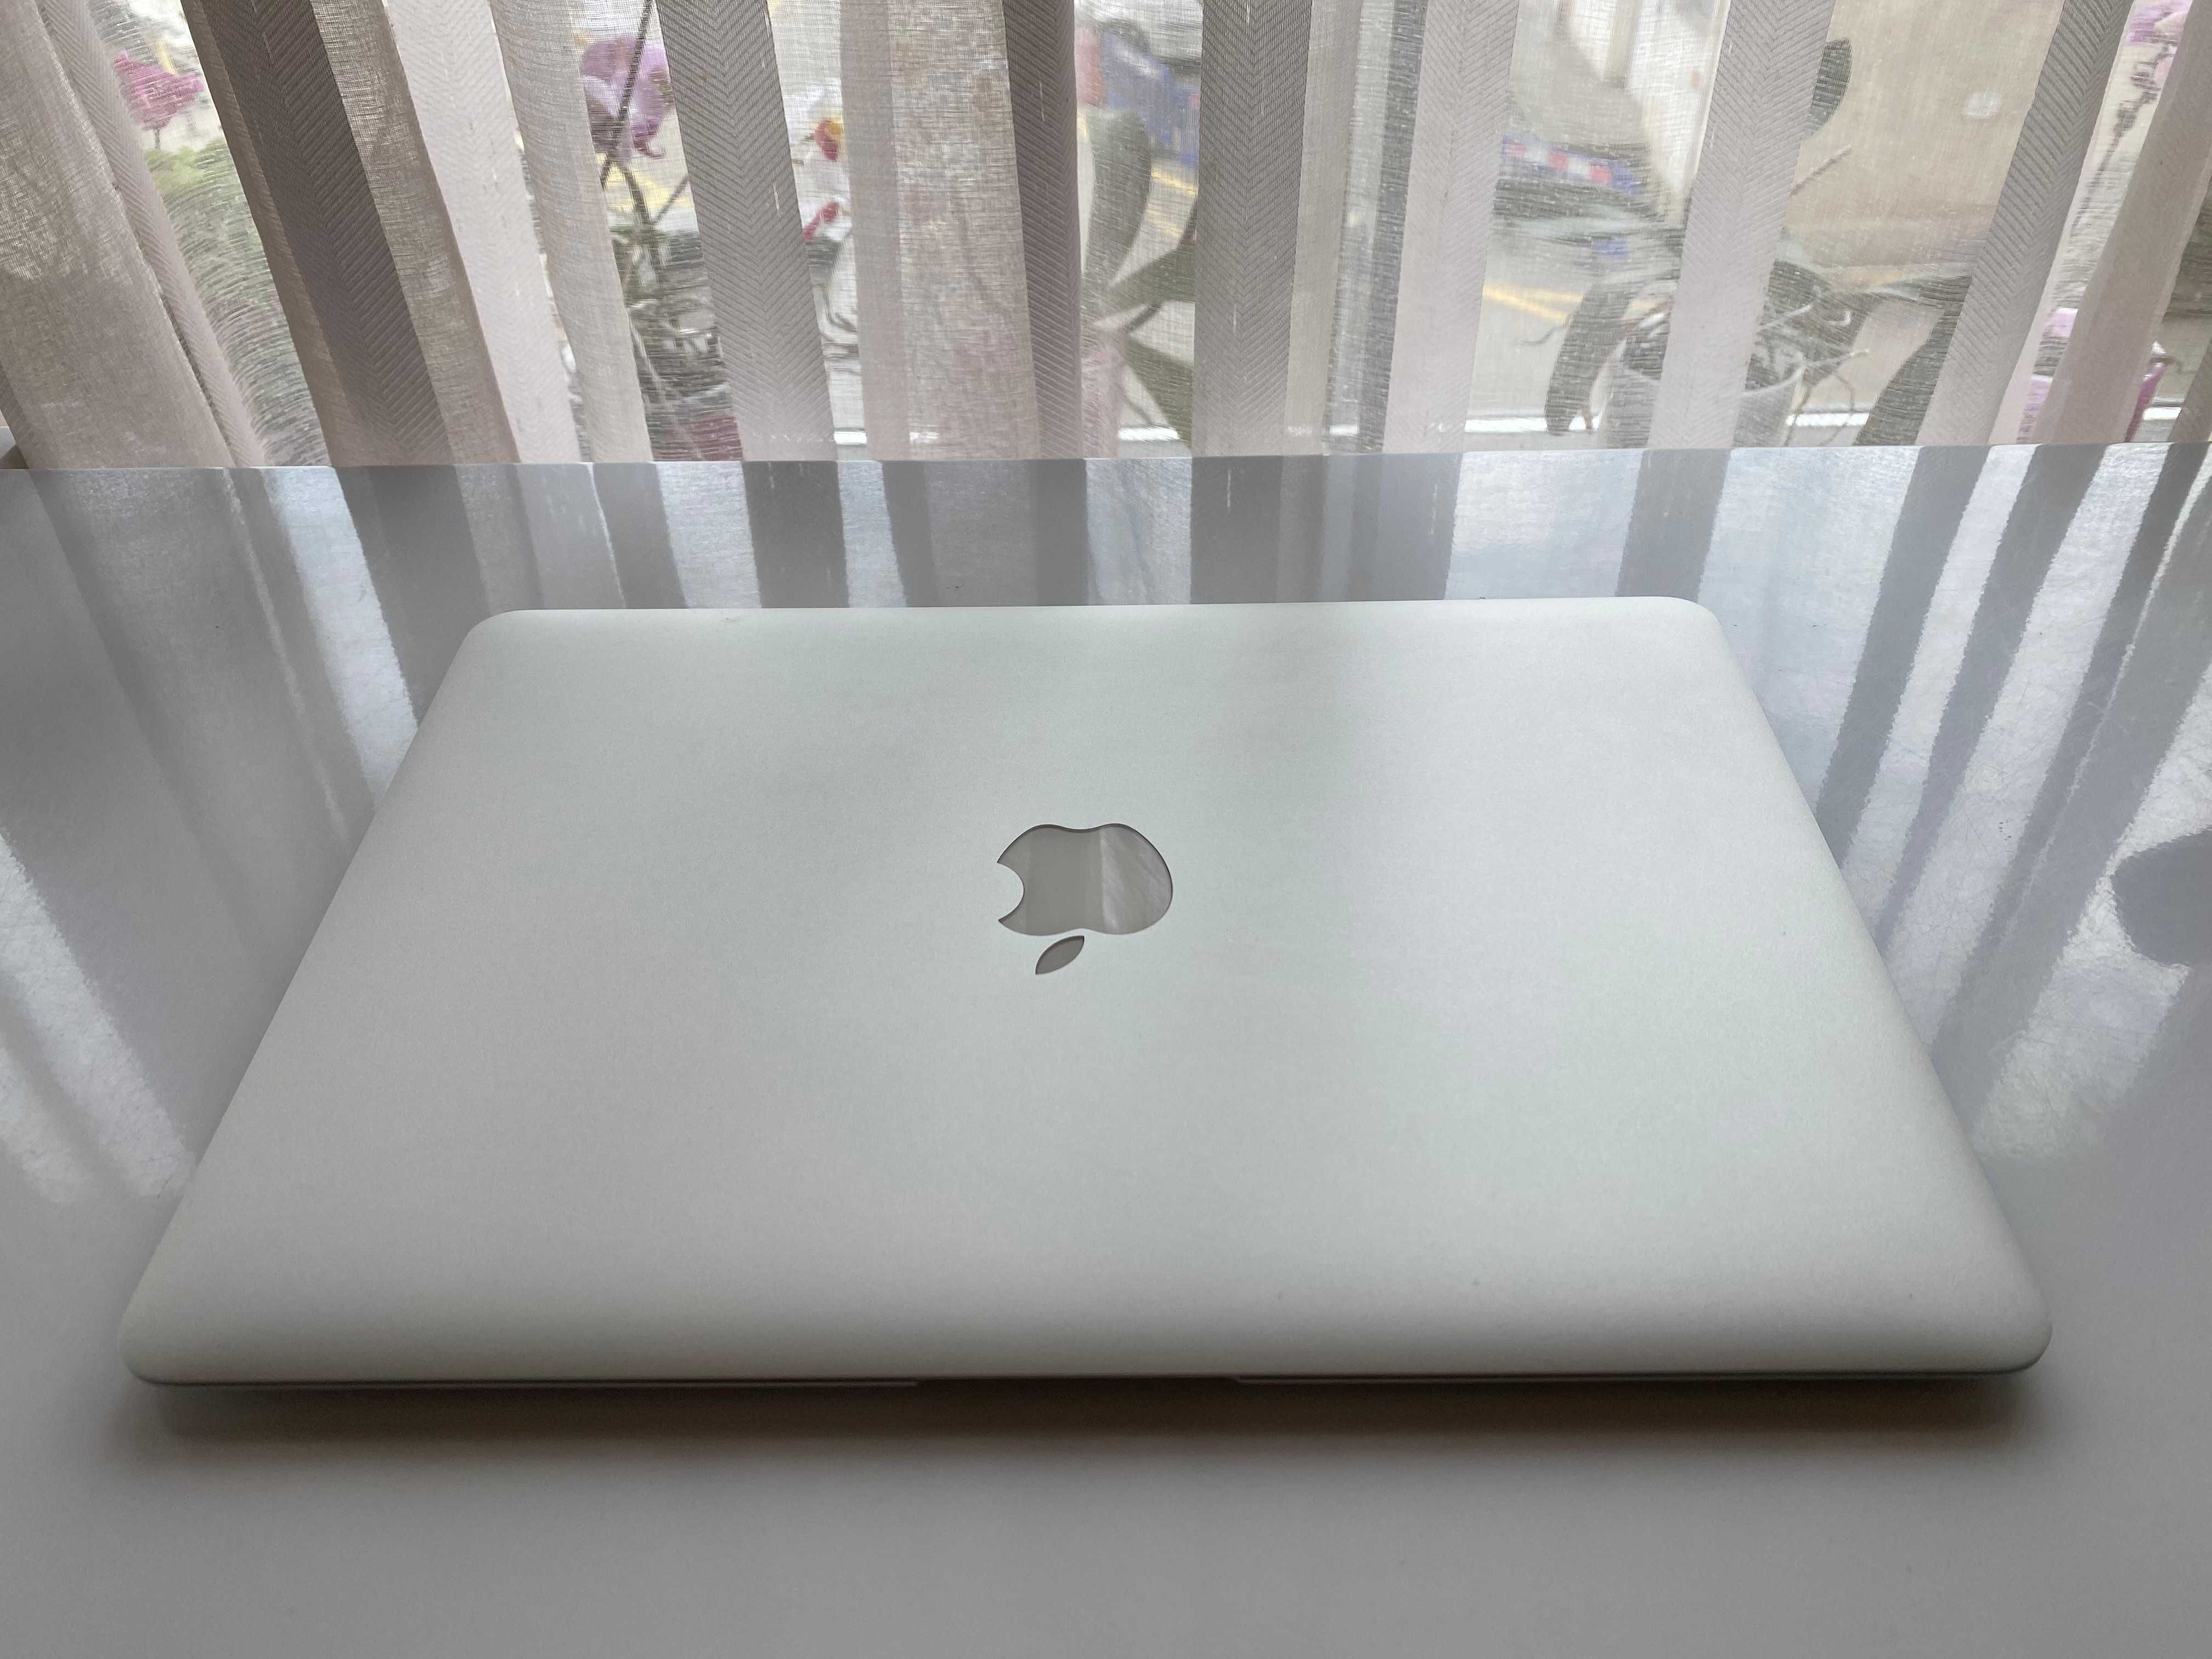 MacBook Air IMPECABIL 13.3, i5, 1,6 GHz, 4GB, 256 GB